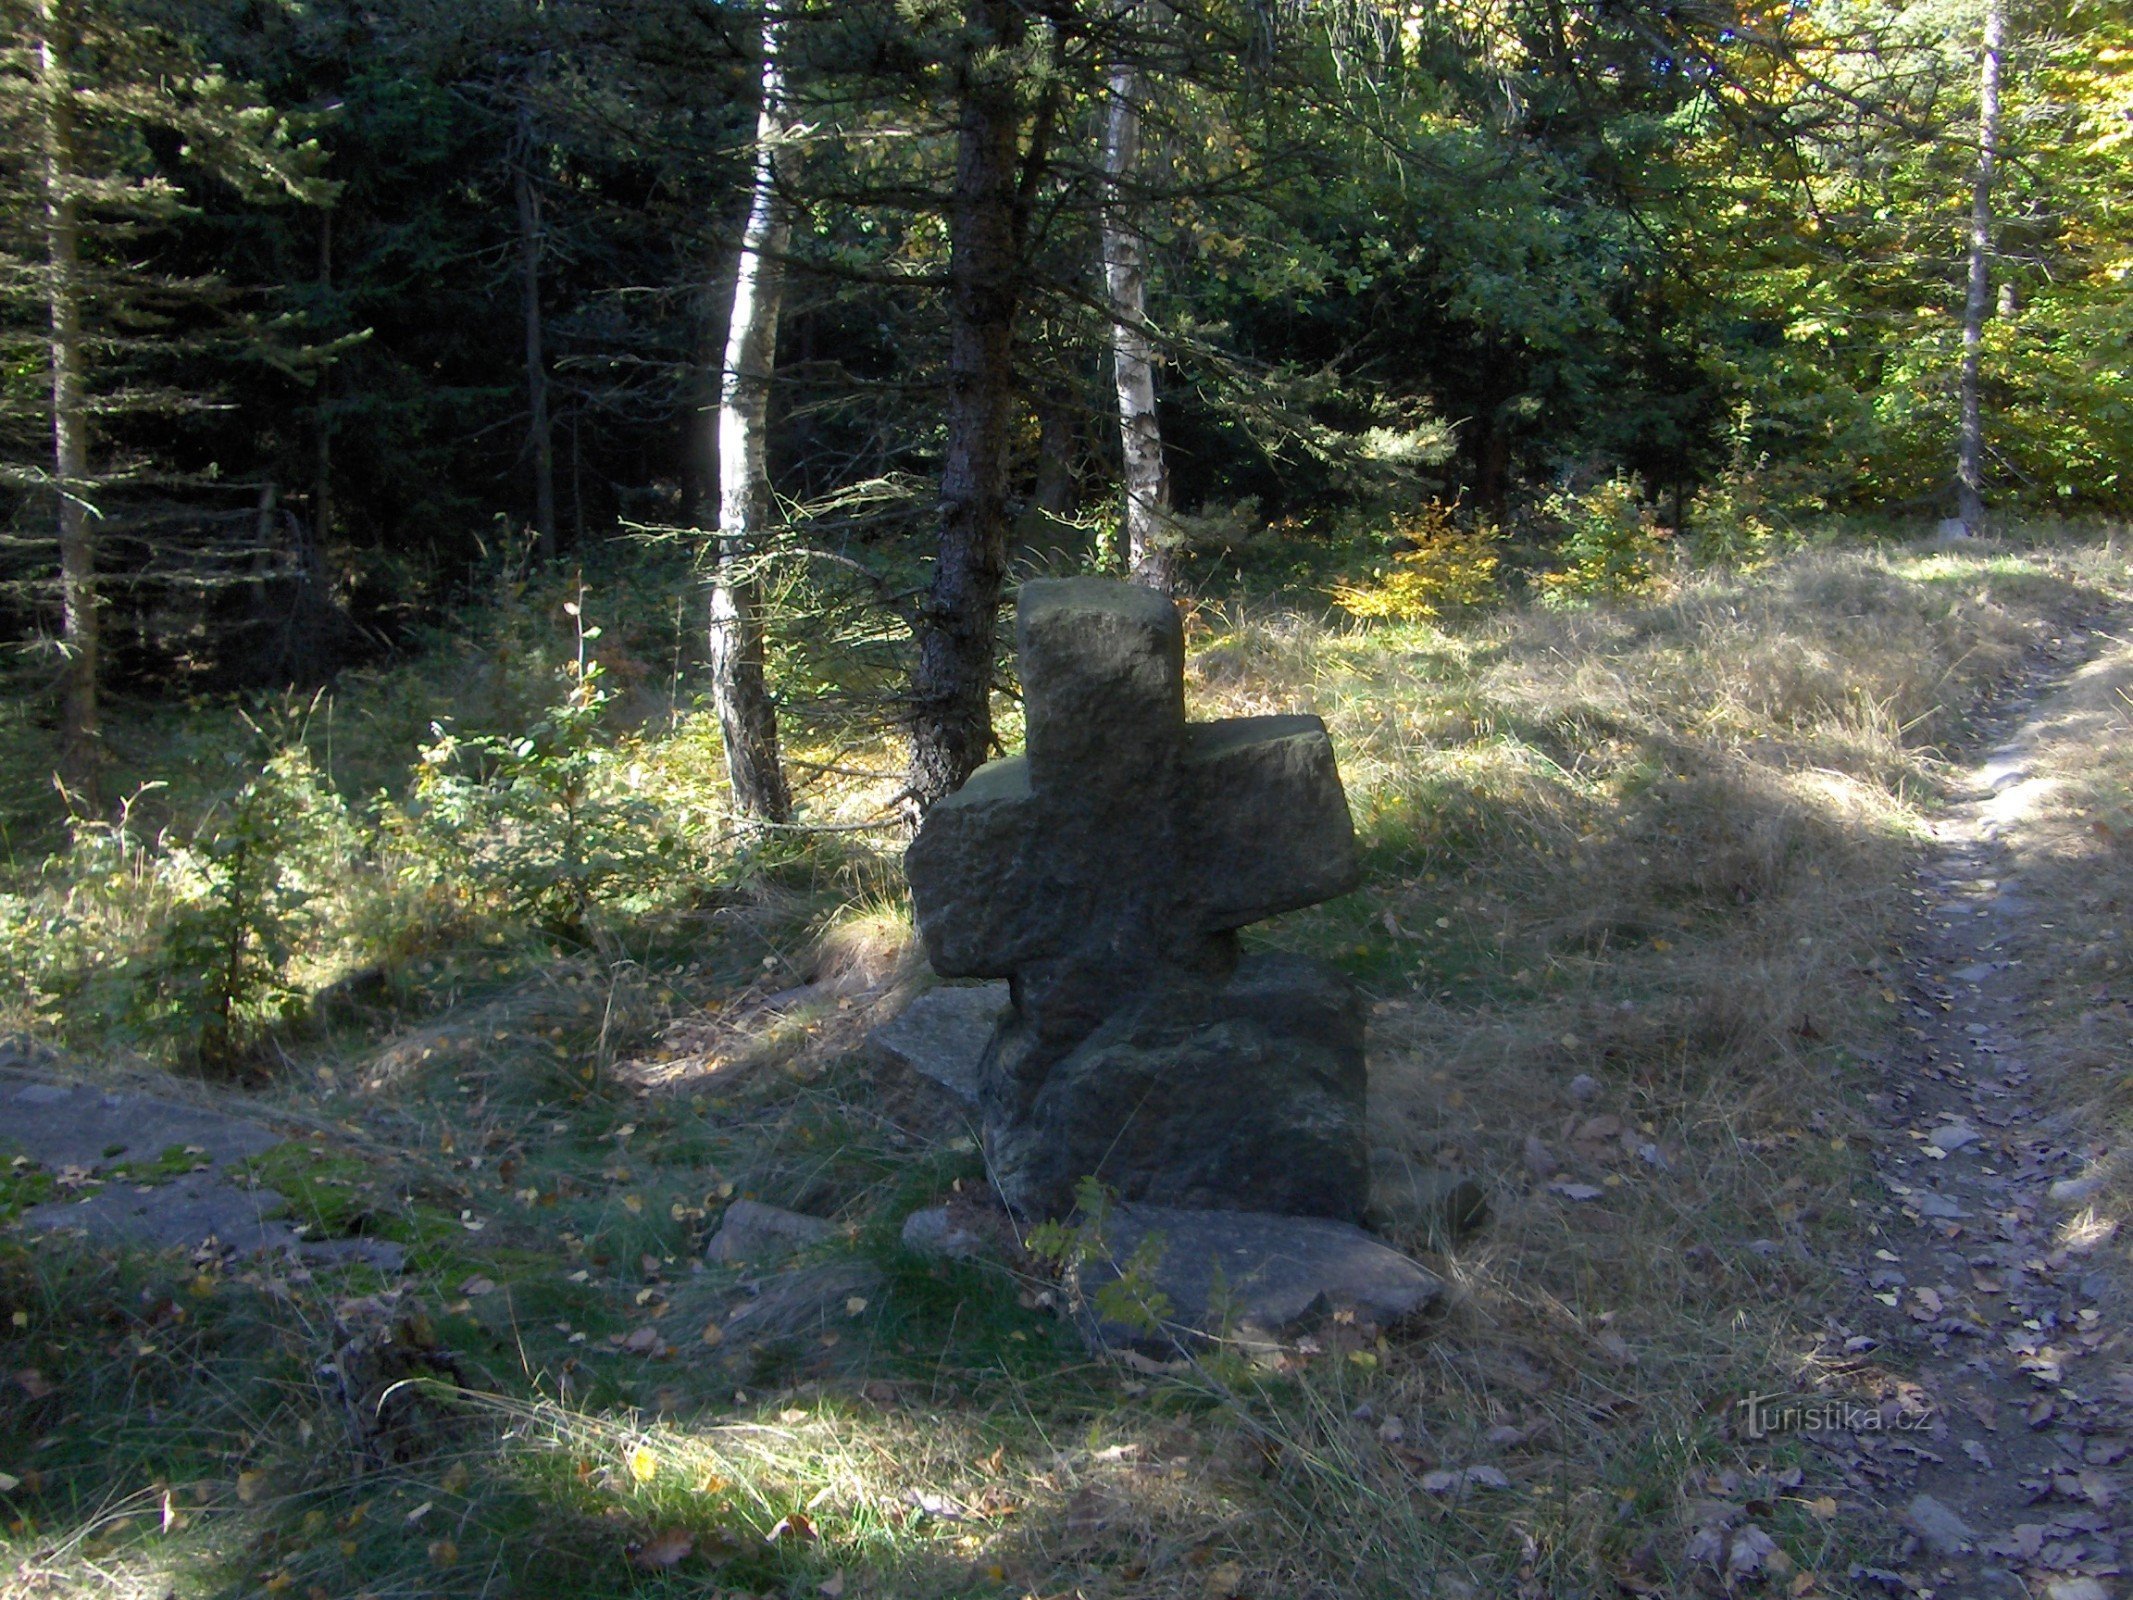 The Reconciliation Cross on the slope of Na Vyhlídka hill.